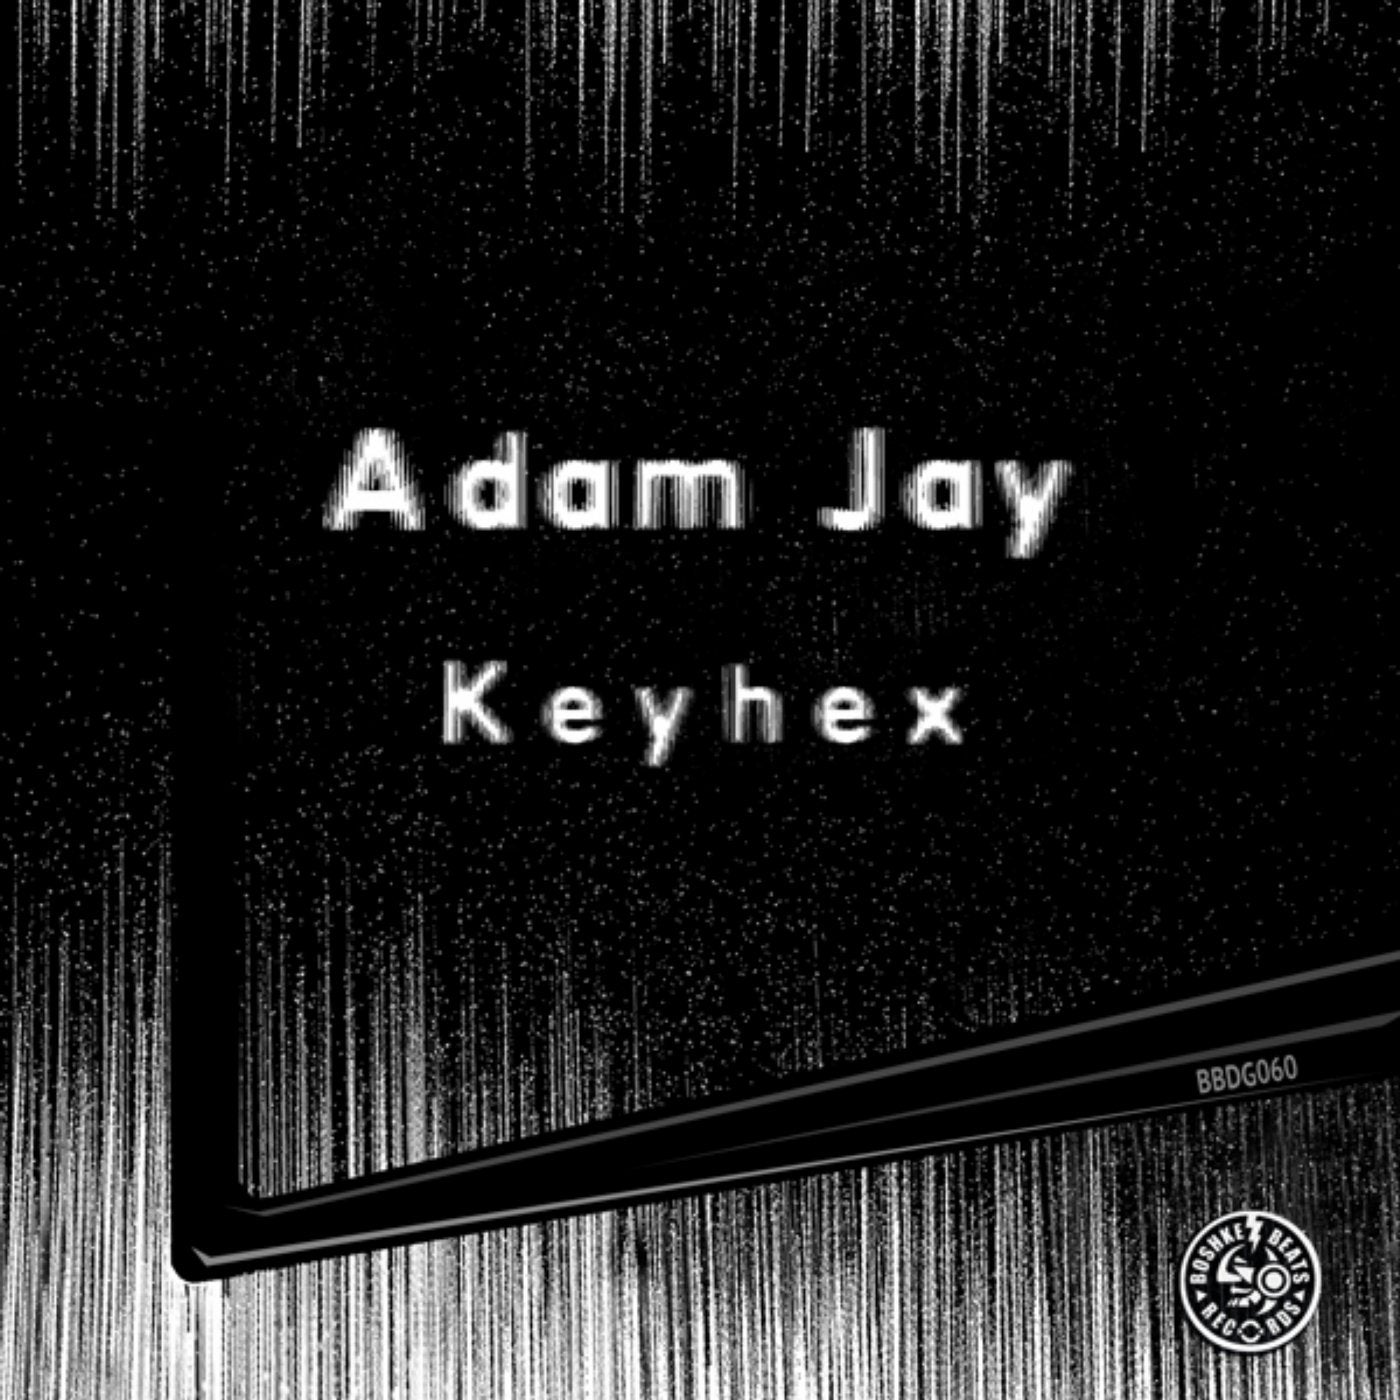 Adam Jay "Keyhex"